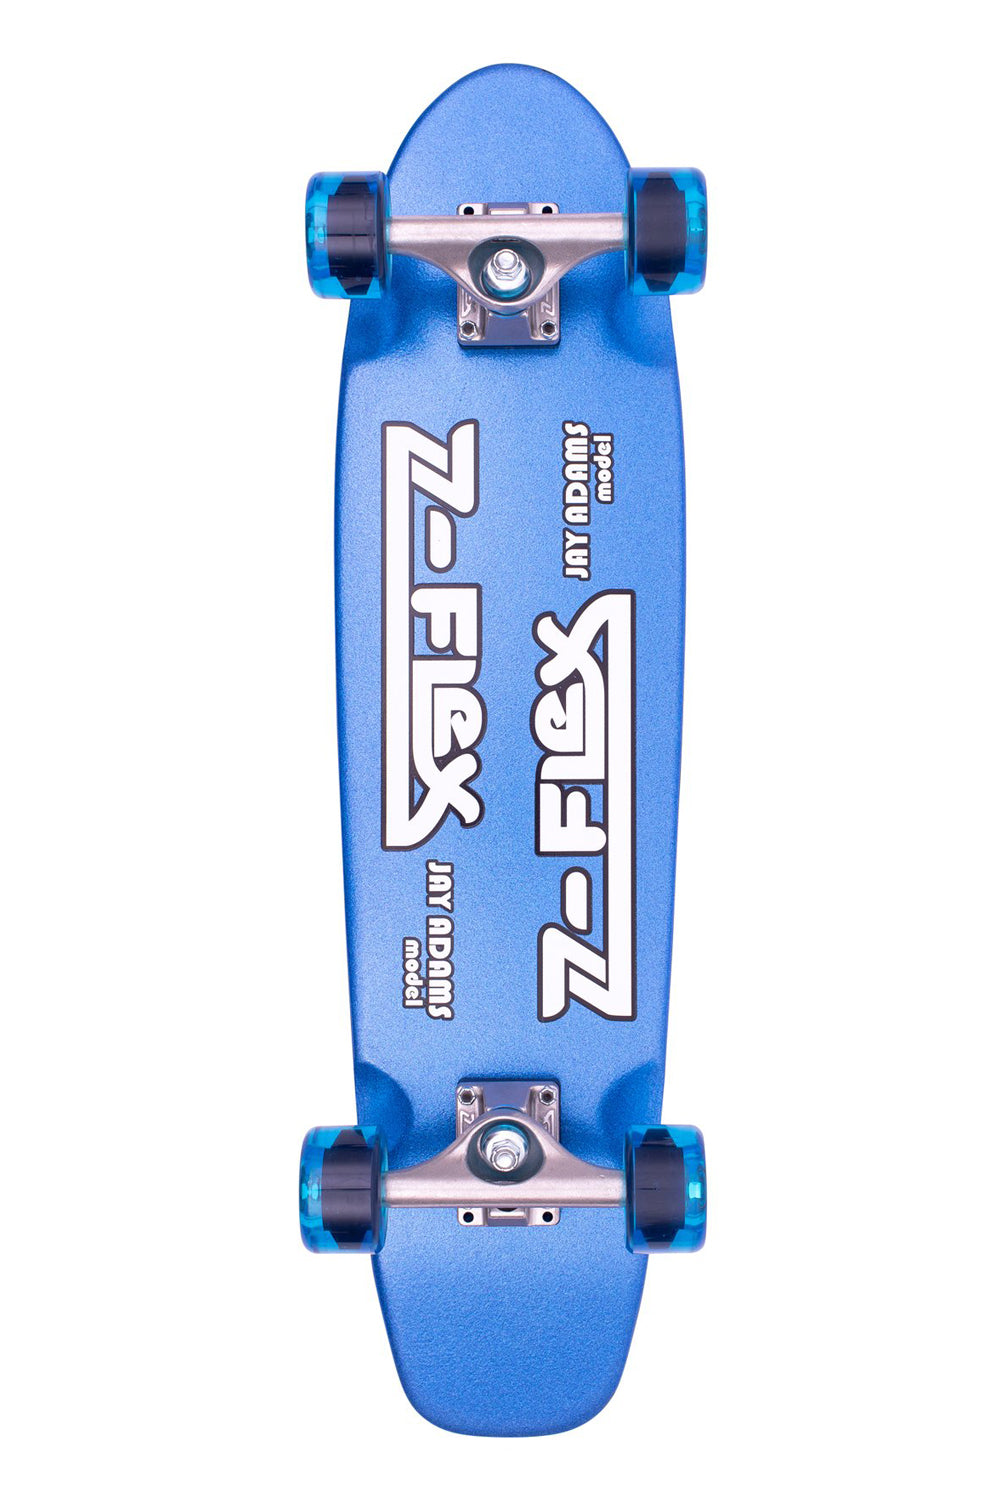 Z Flex Metal Flake Blue 29” Cruiser Skateboard